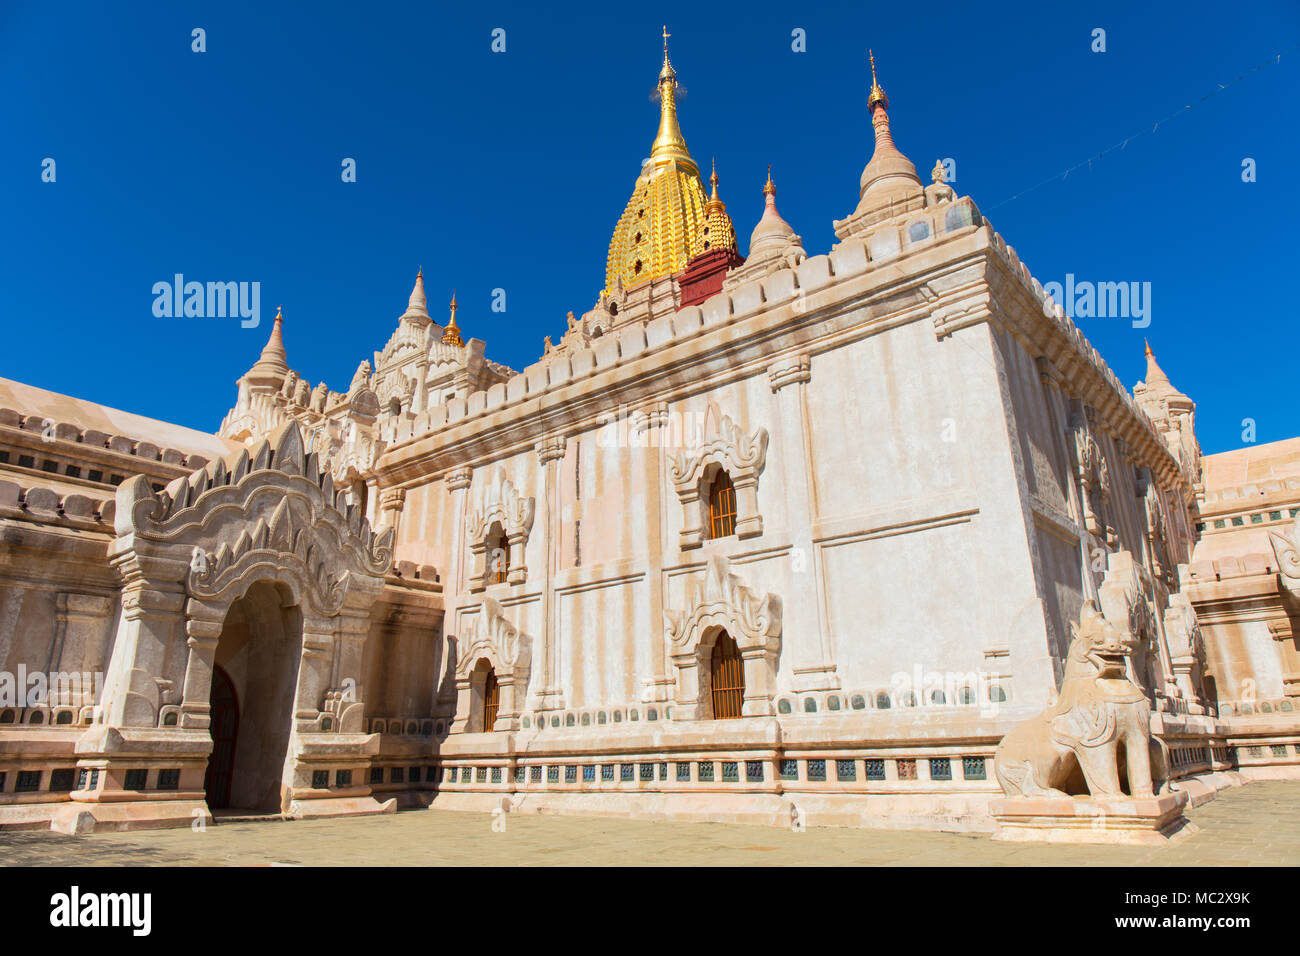 The exterior of the "Ananda Temple" in Bagan, Myanmar (Burma). Stock Photo